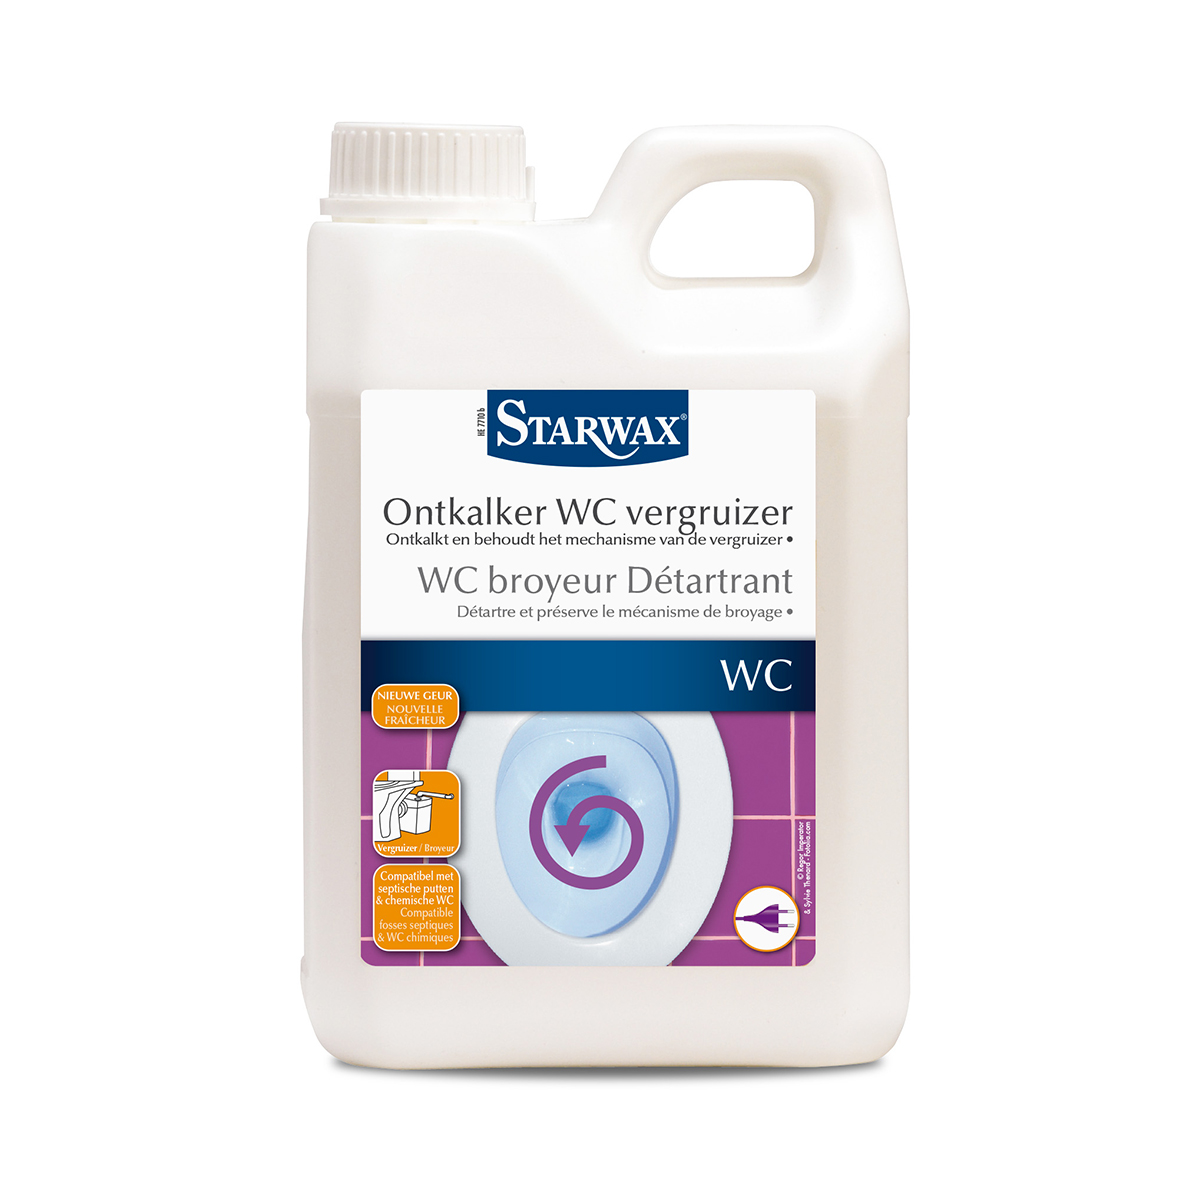 Nettoyant pour wc avec javel, STARWAX, 0.750 L